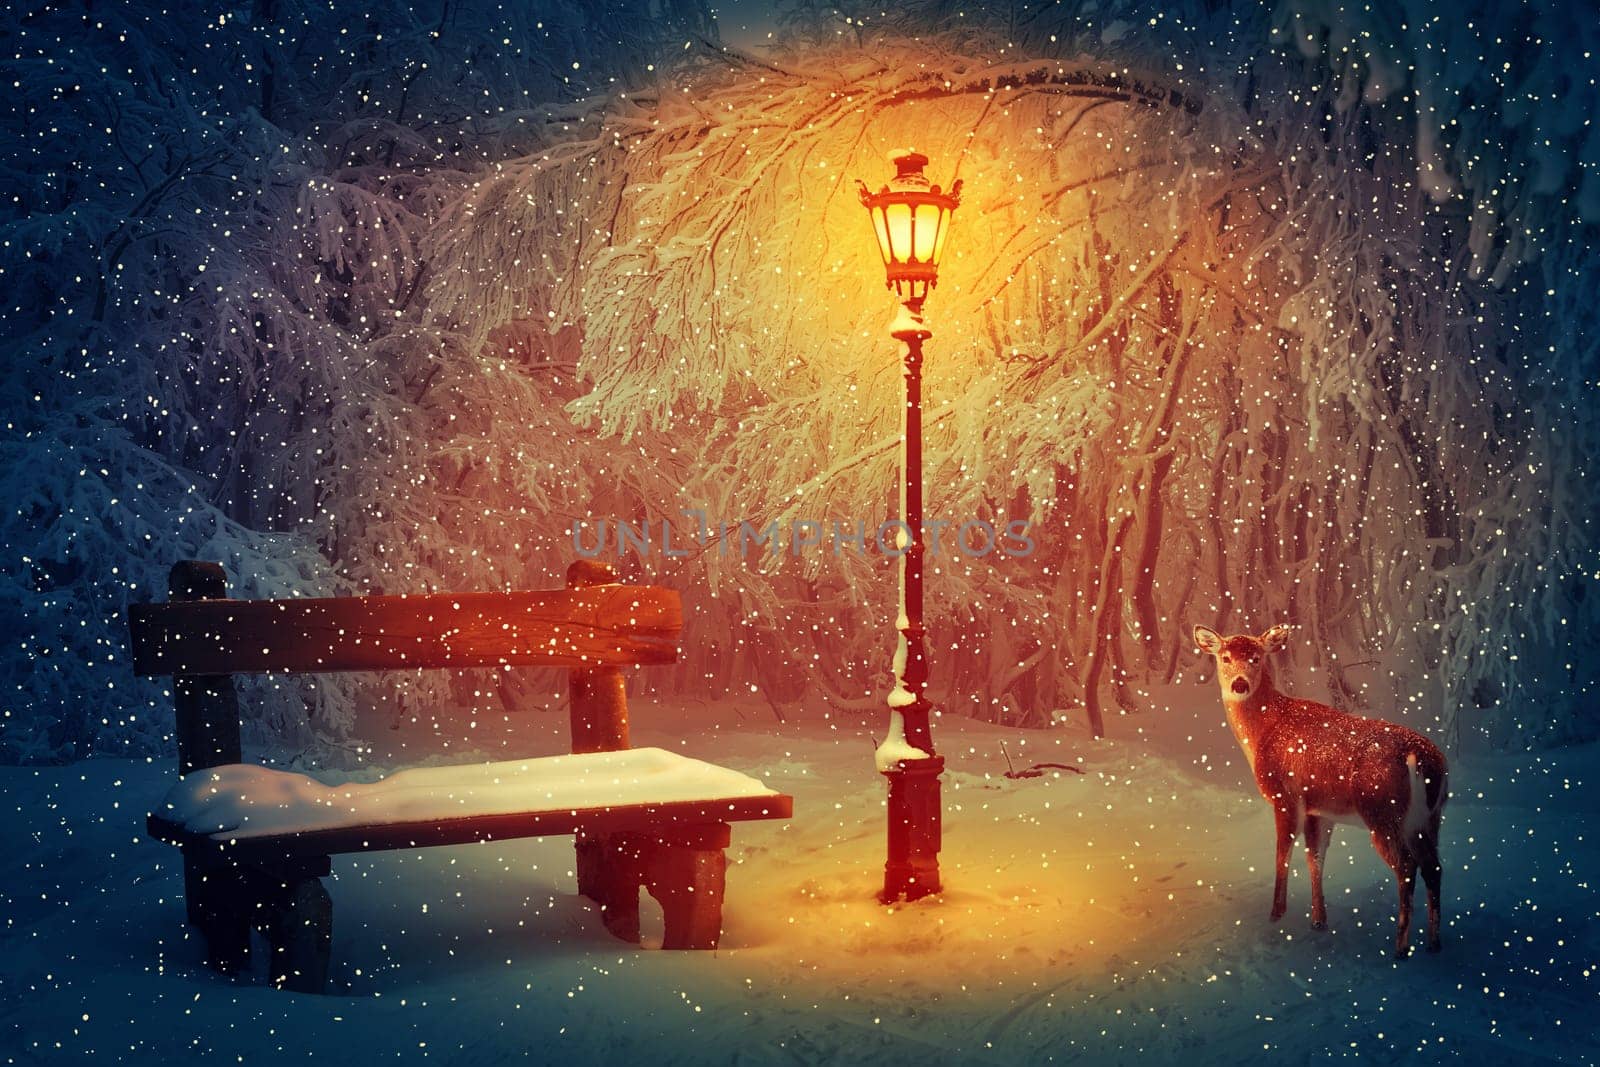 winter silence by psychoshadow